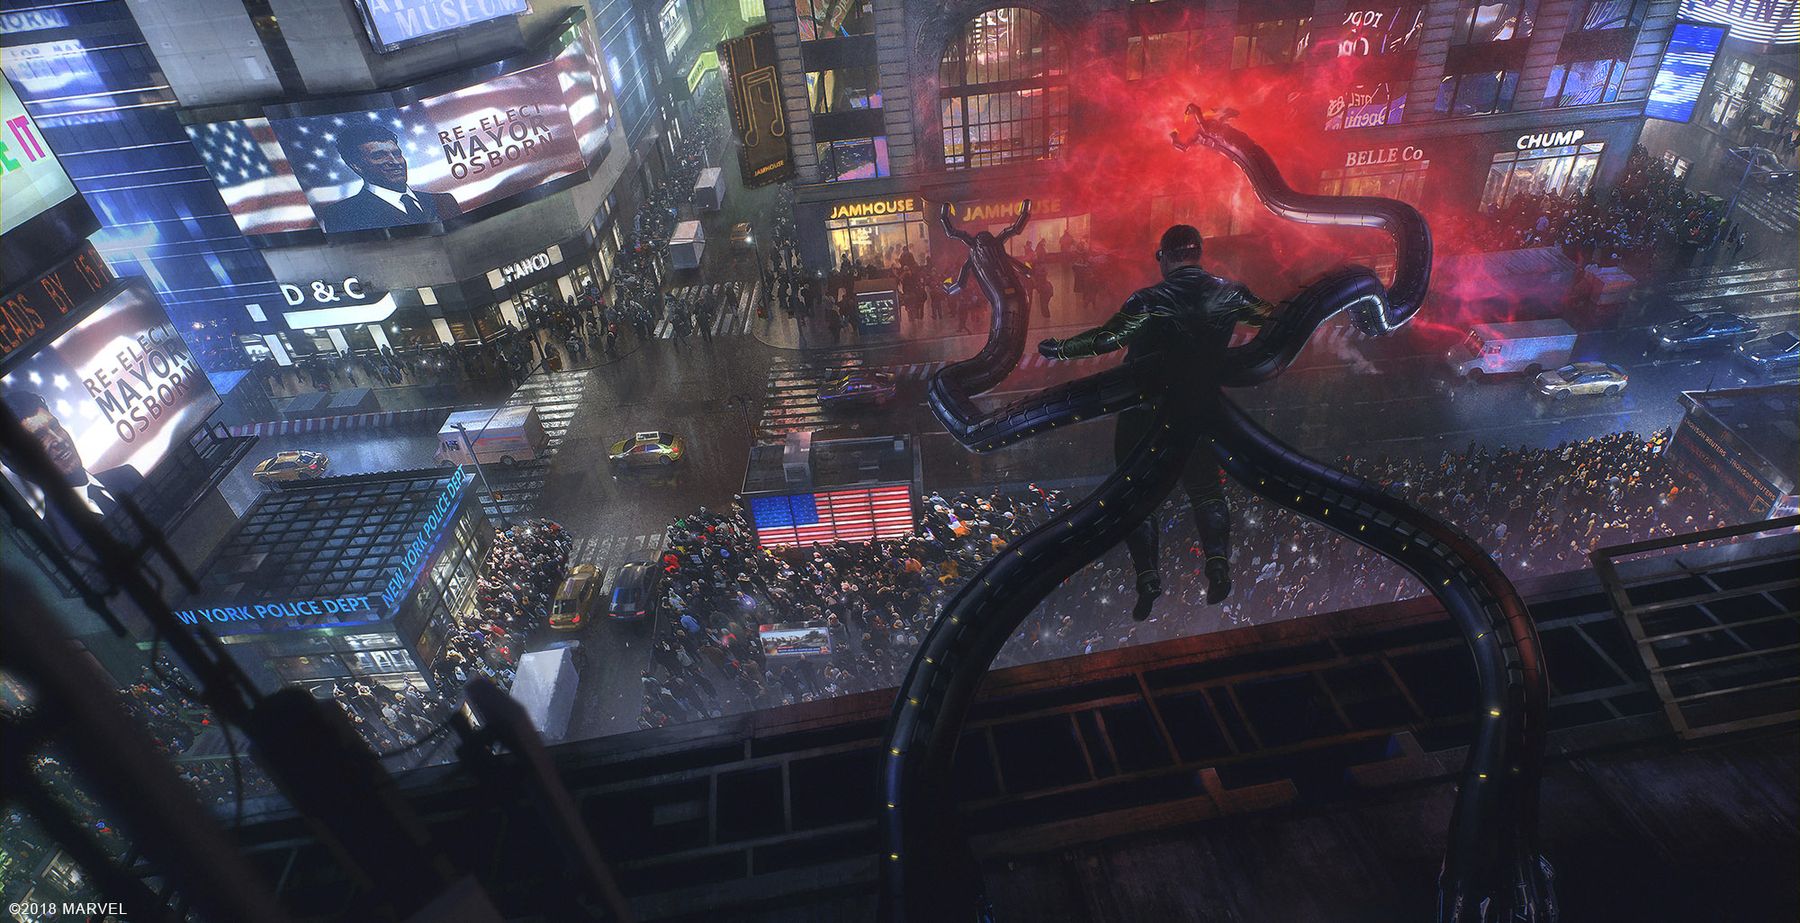 Marvel's Spider-Man (PS4) Visual Development Art by Julien Renoult